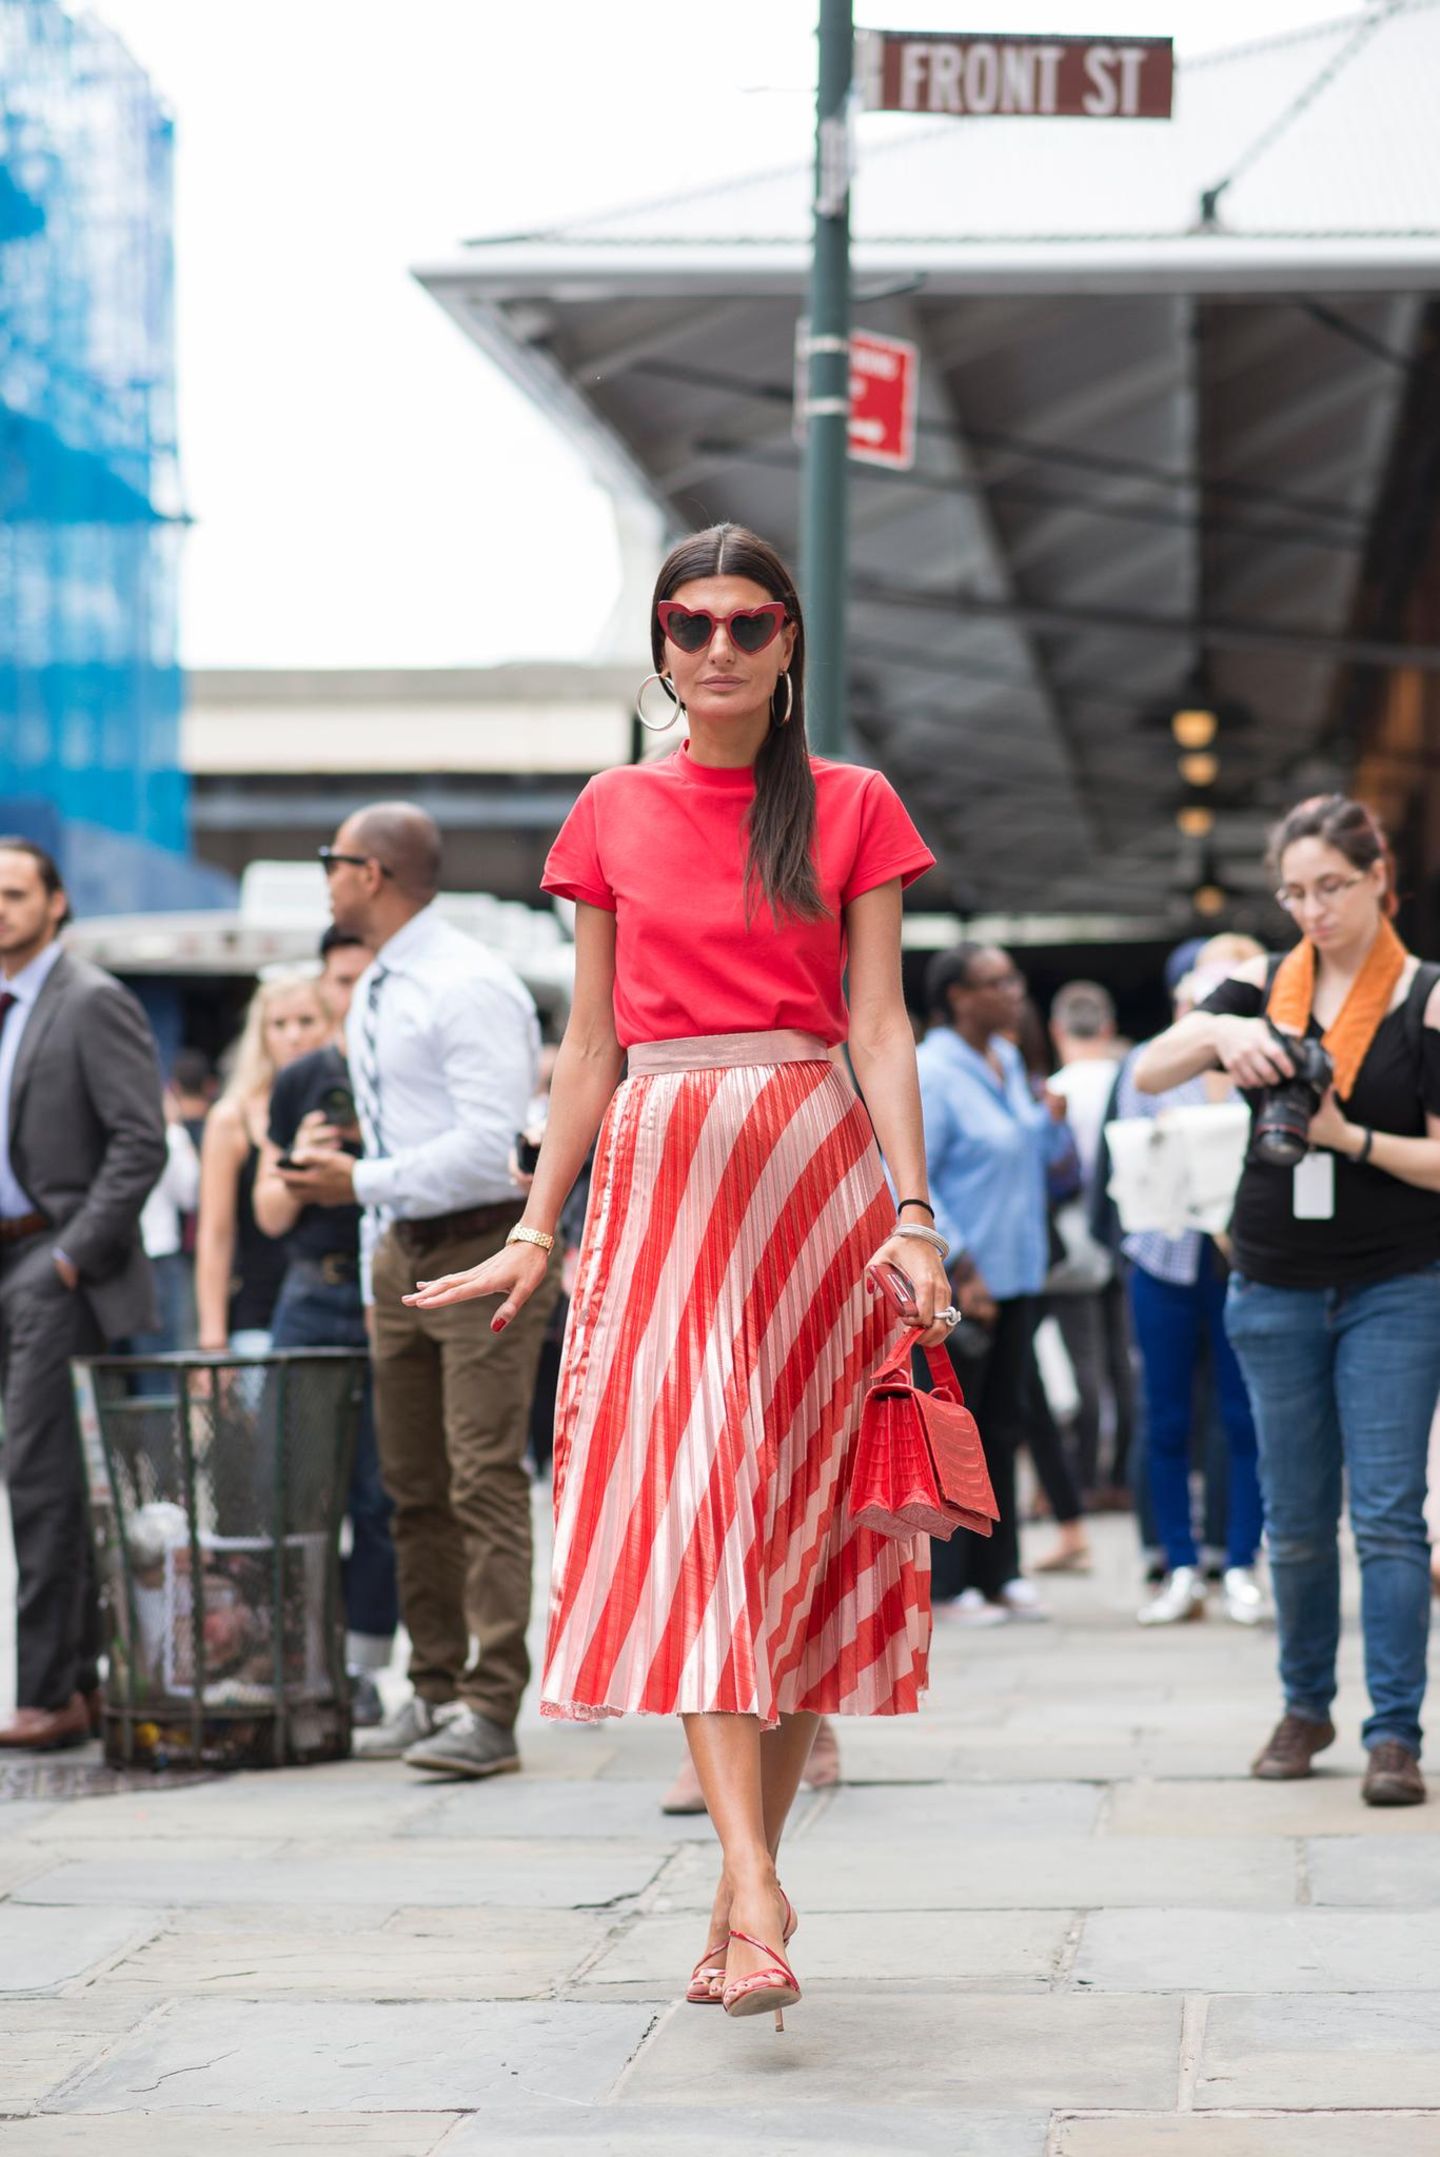 Bloggerin trägt ein Outfit komplett in Rot